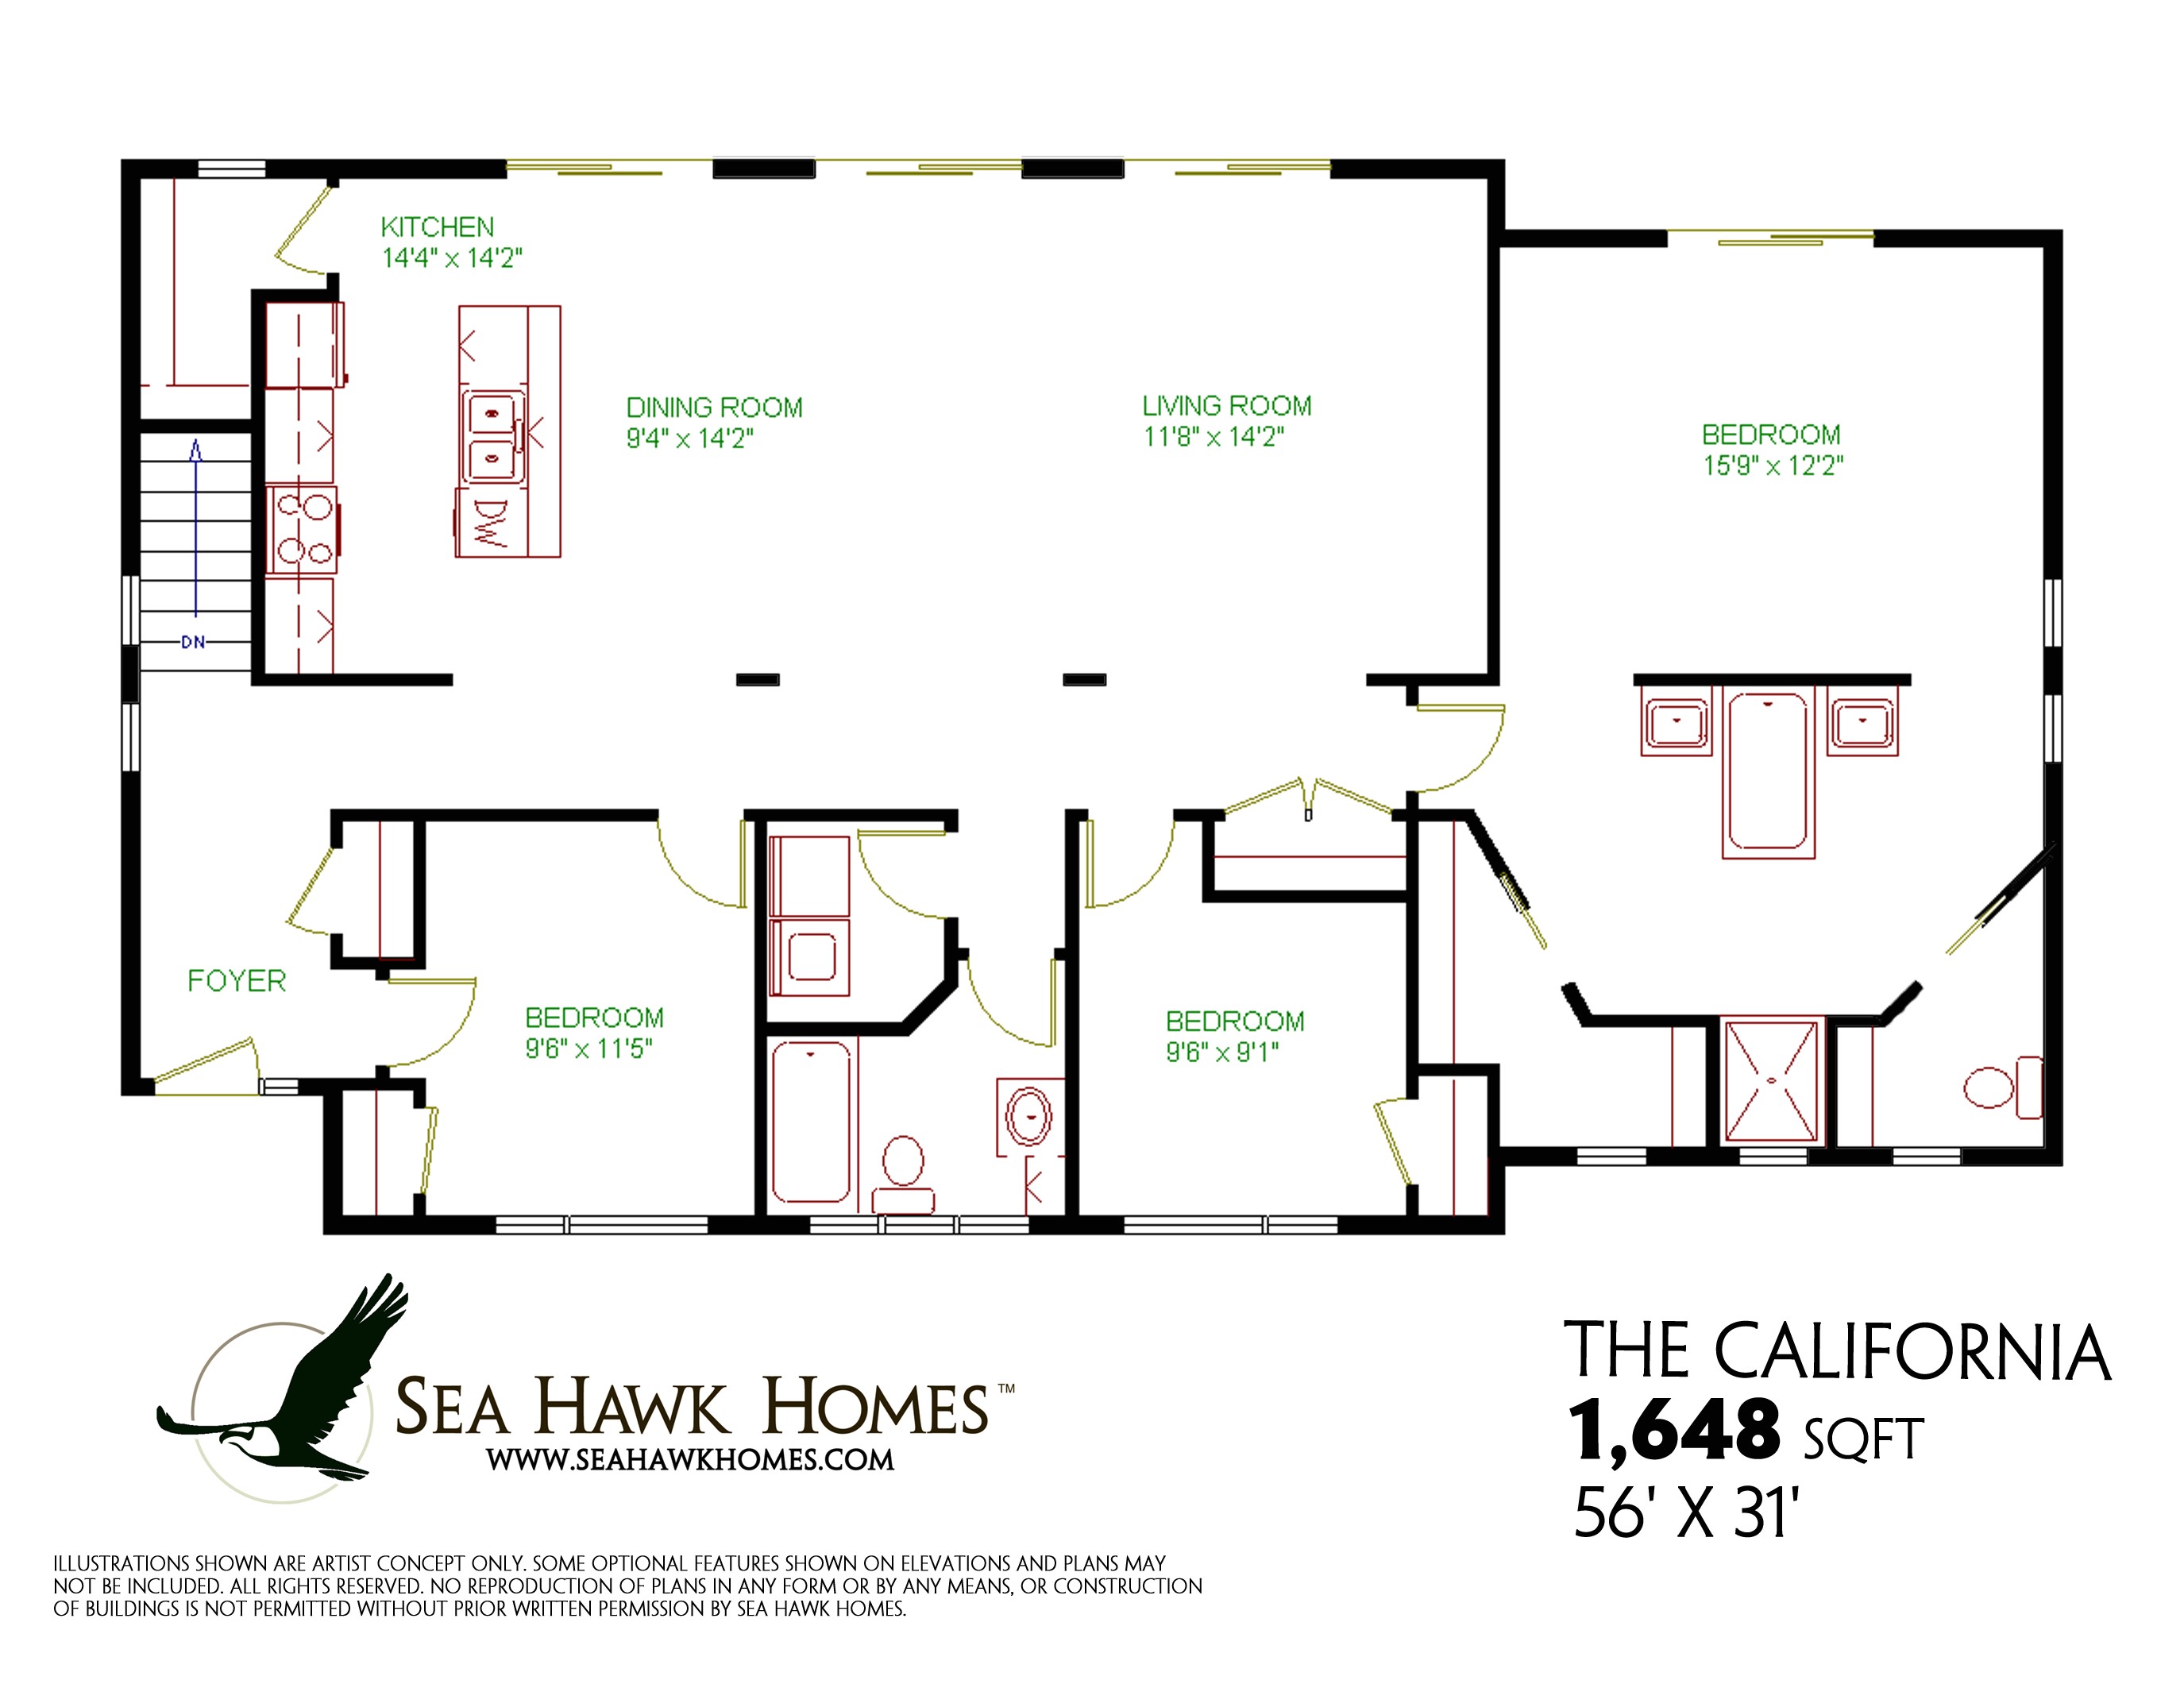 California House Plans with Photos California Sea Hawk Homes